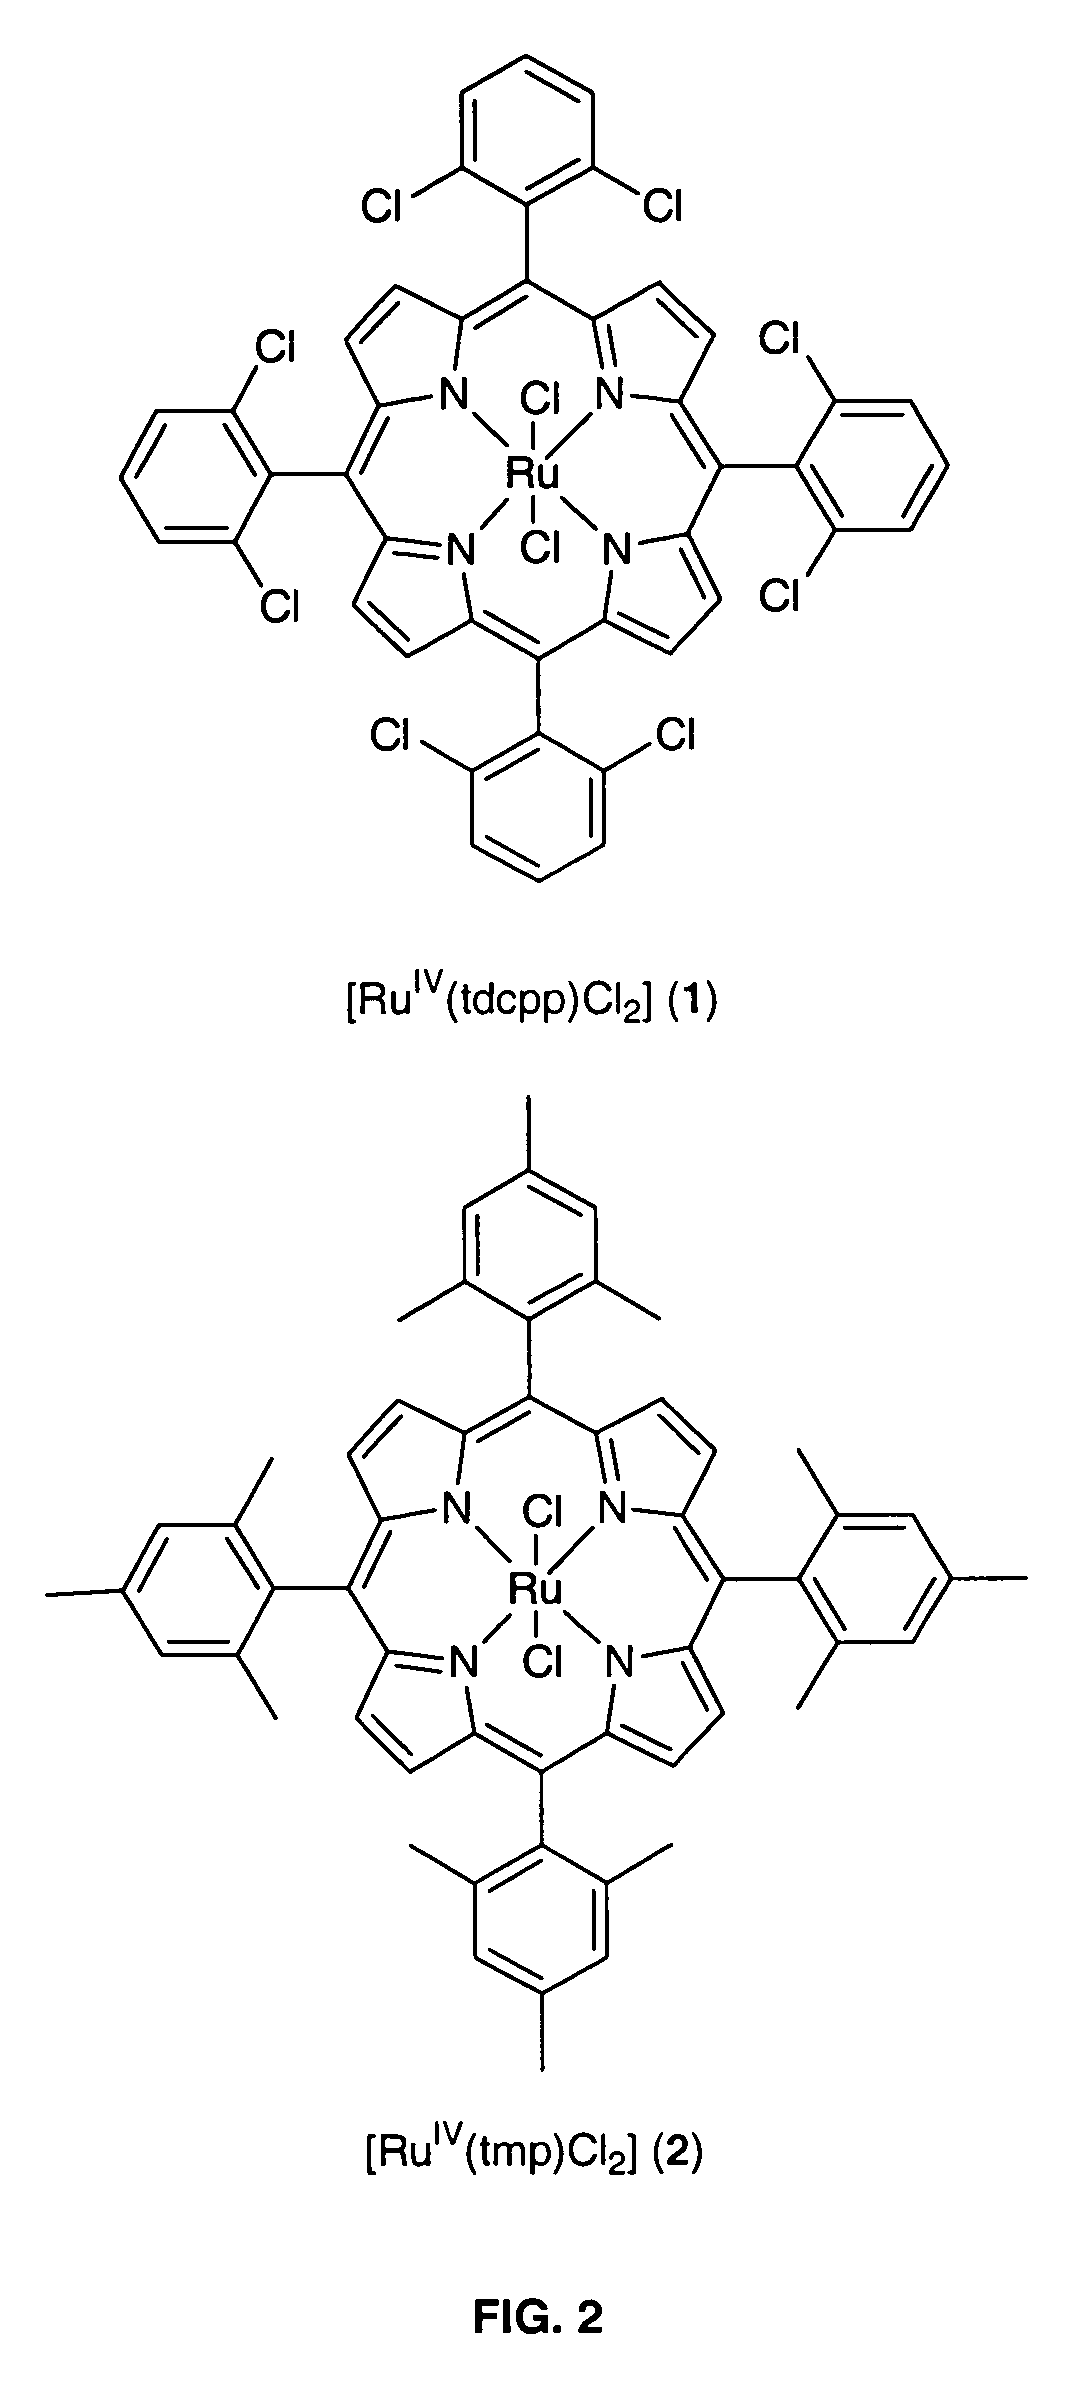 Method for conversion of terminal alkenes to aldehydes using ruthenium (IV) porphyrin catalysts